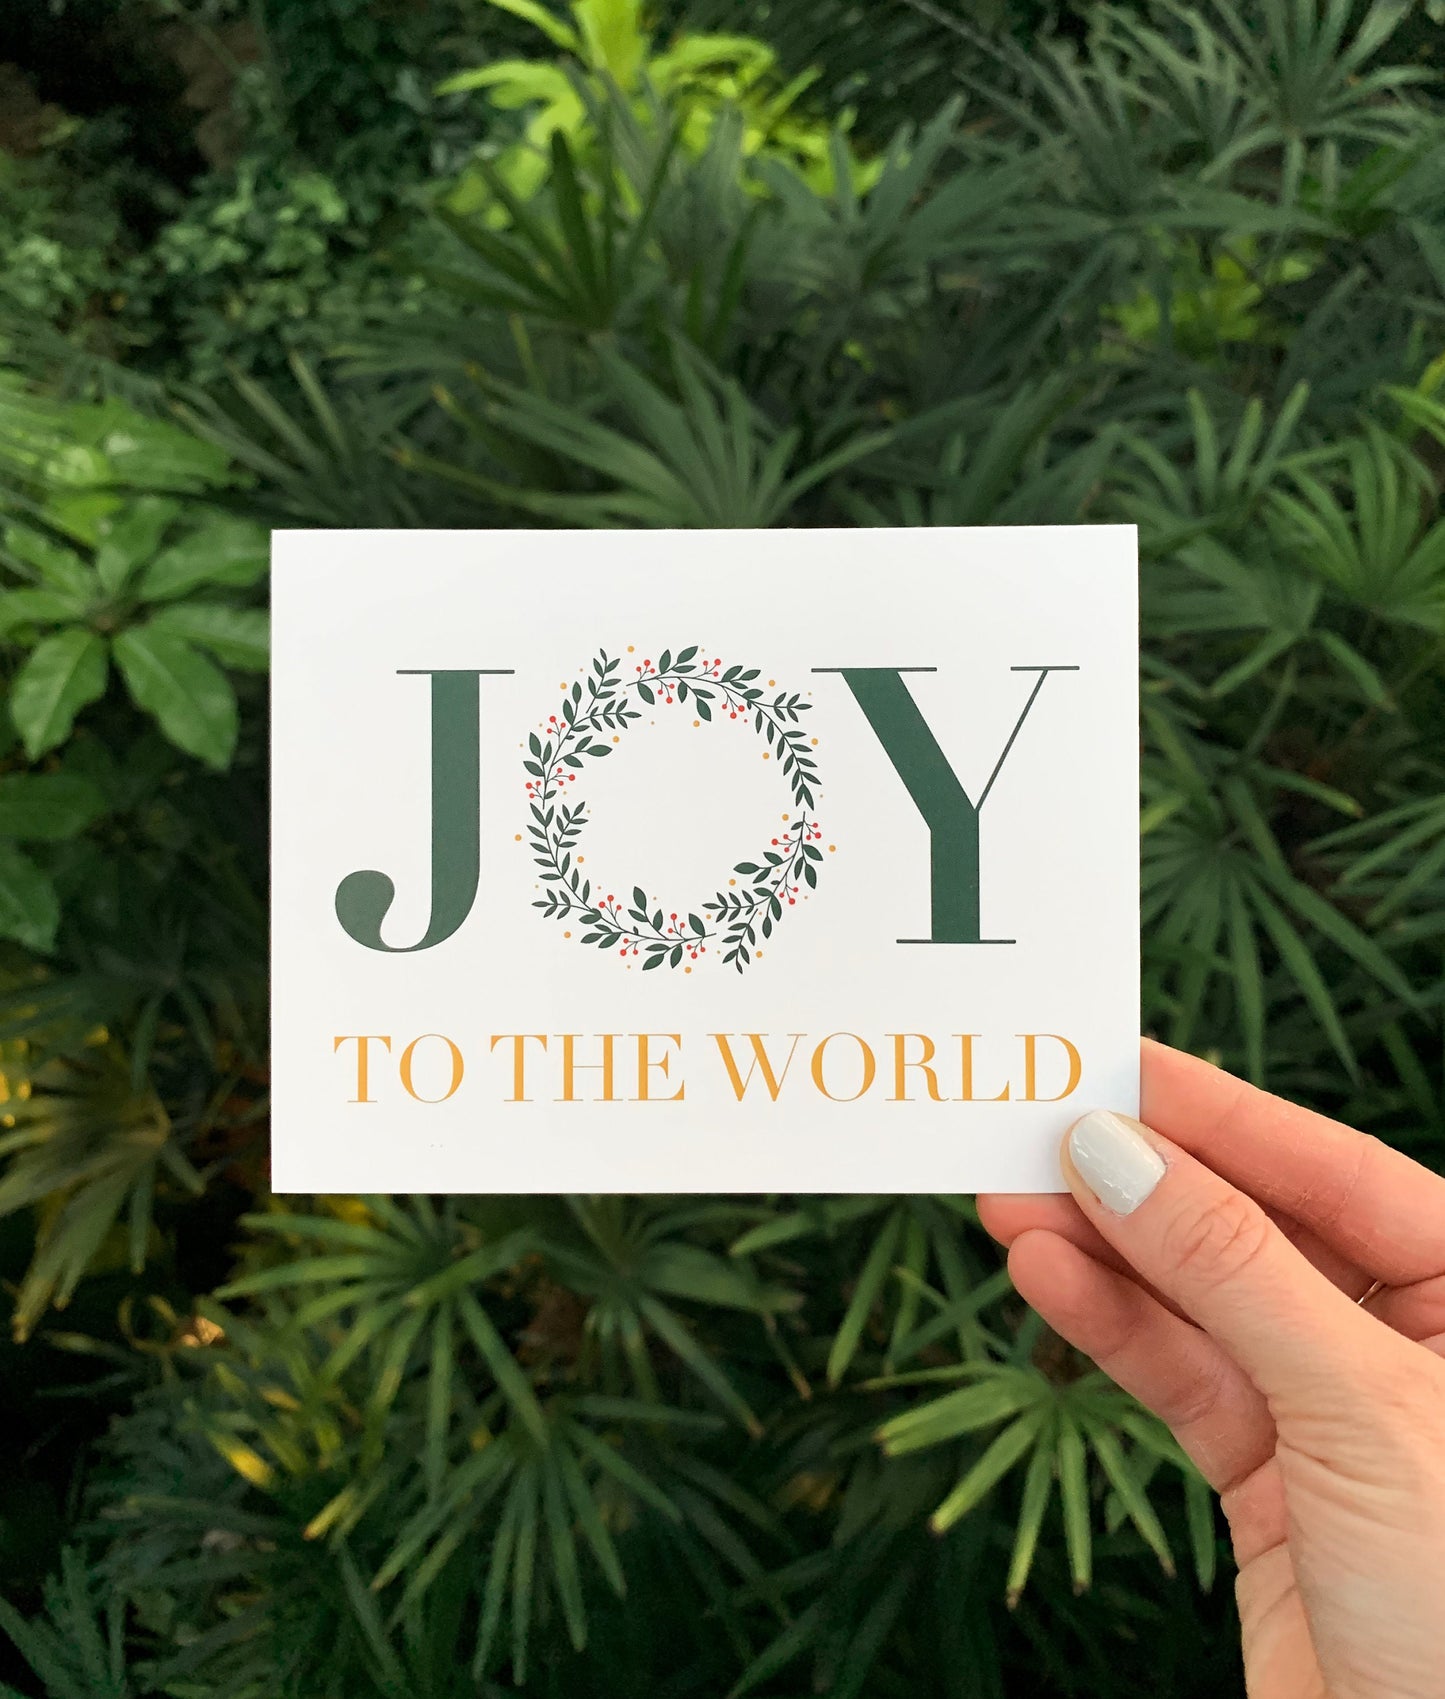 Joy to the World Christmas Card